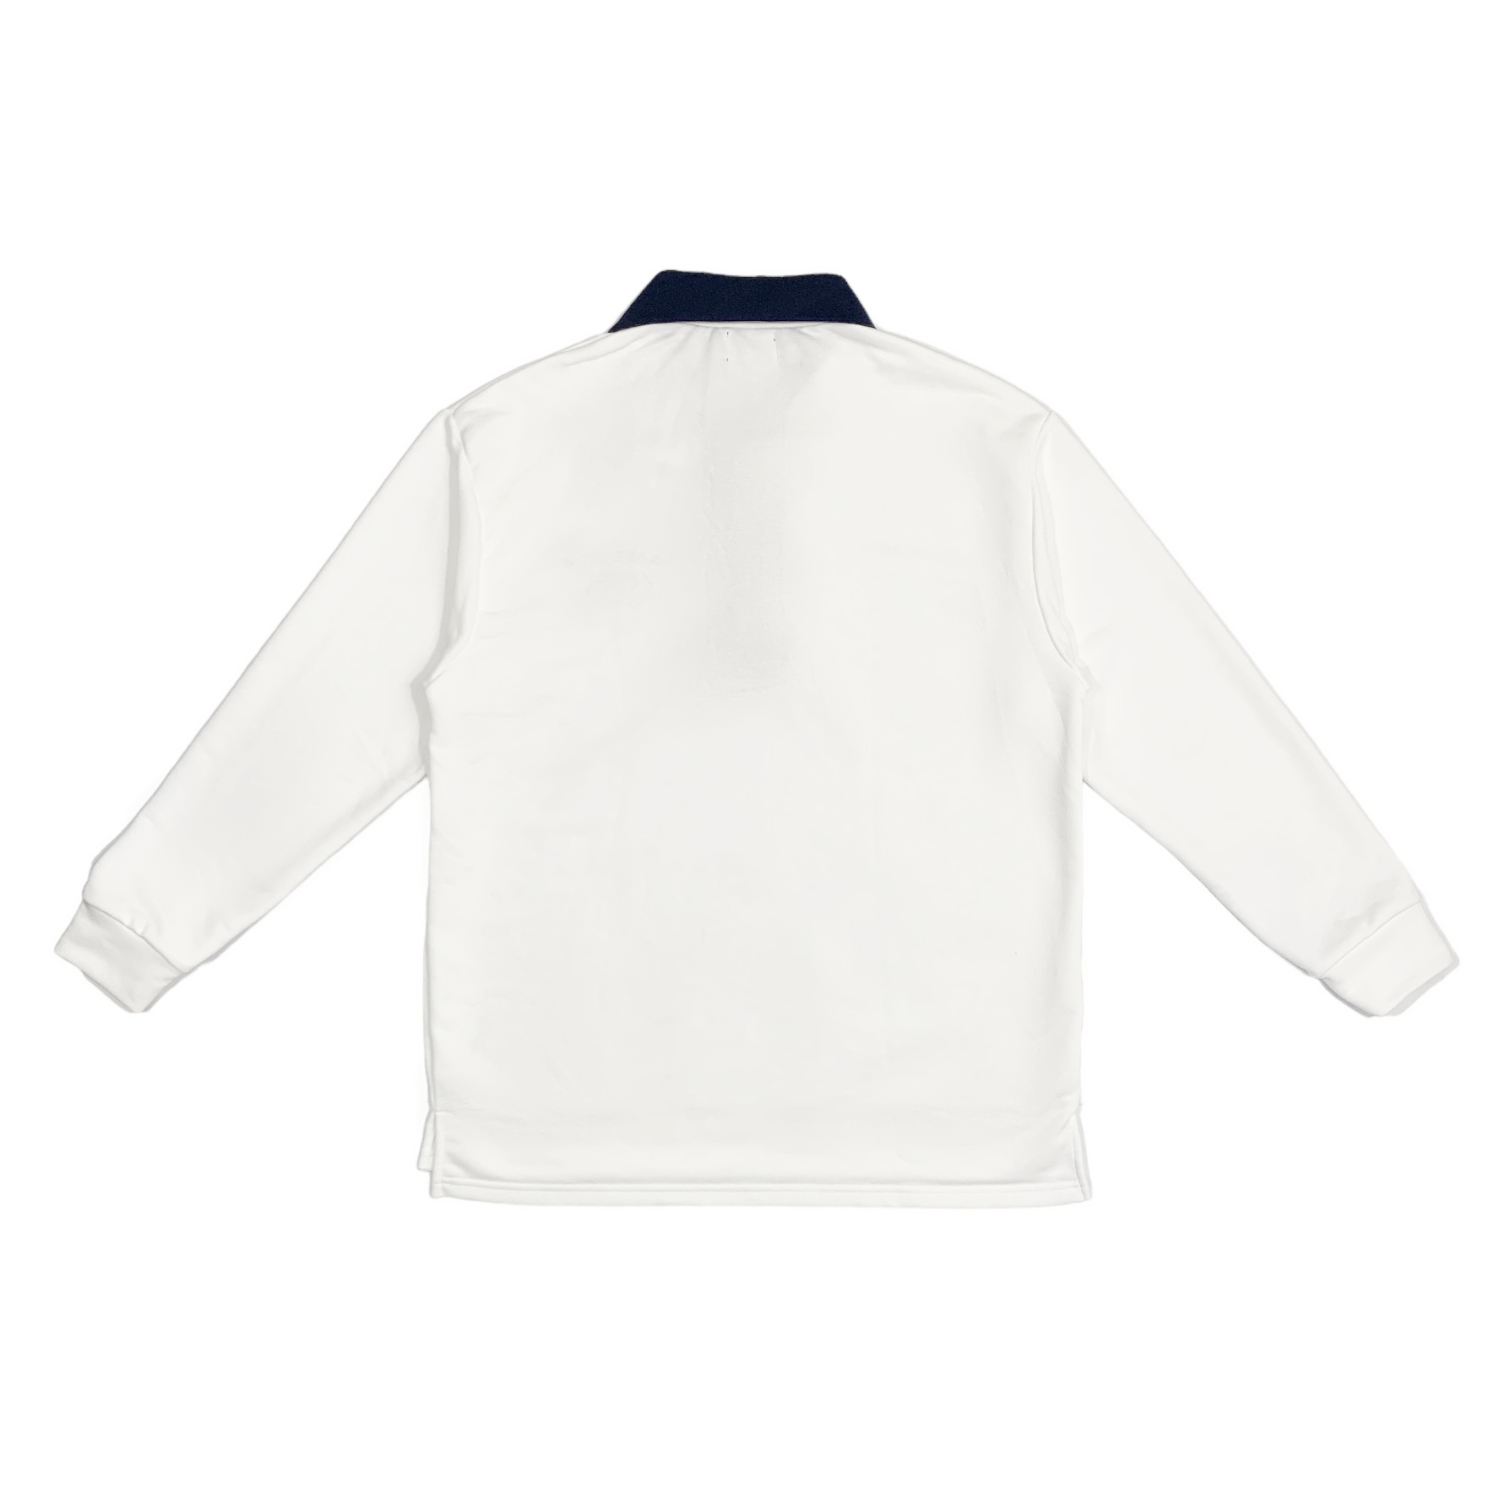 Frank! Club Polo Sweatshirt (White / Navy)